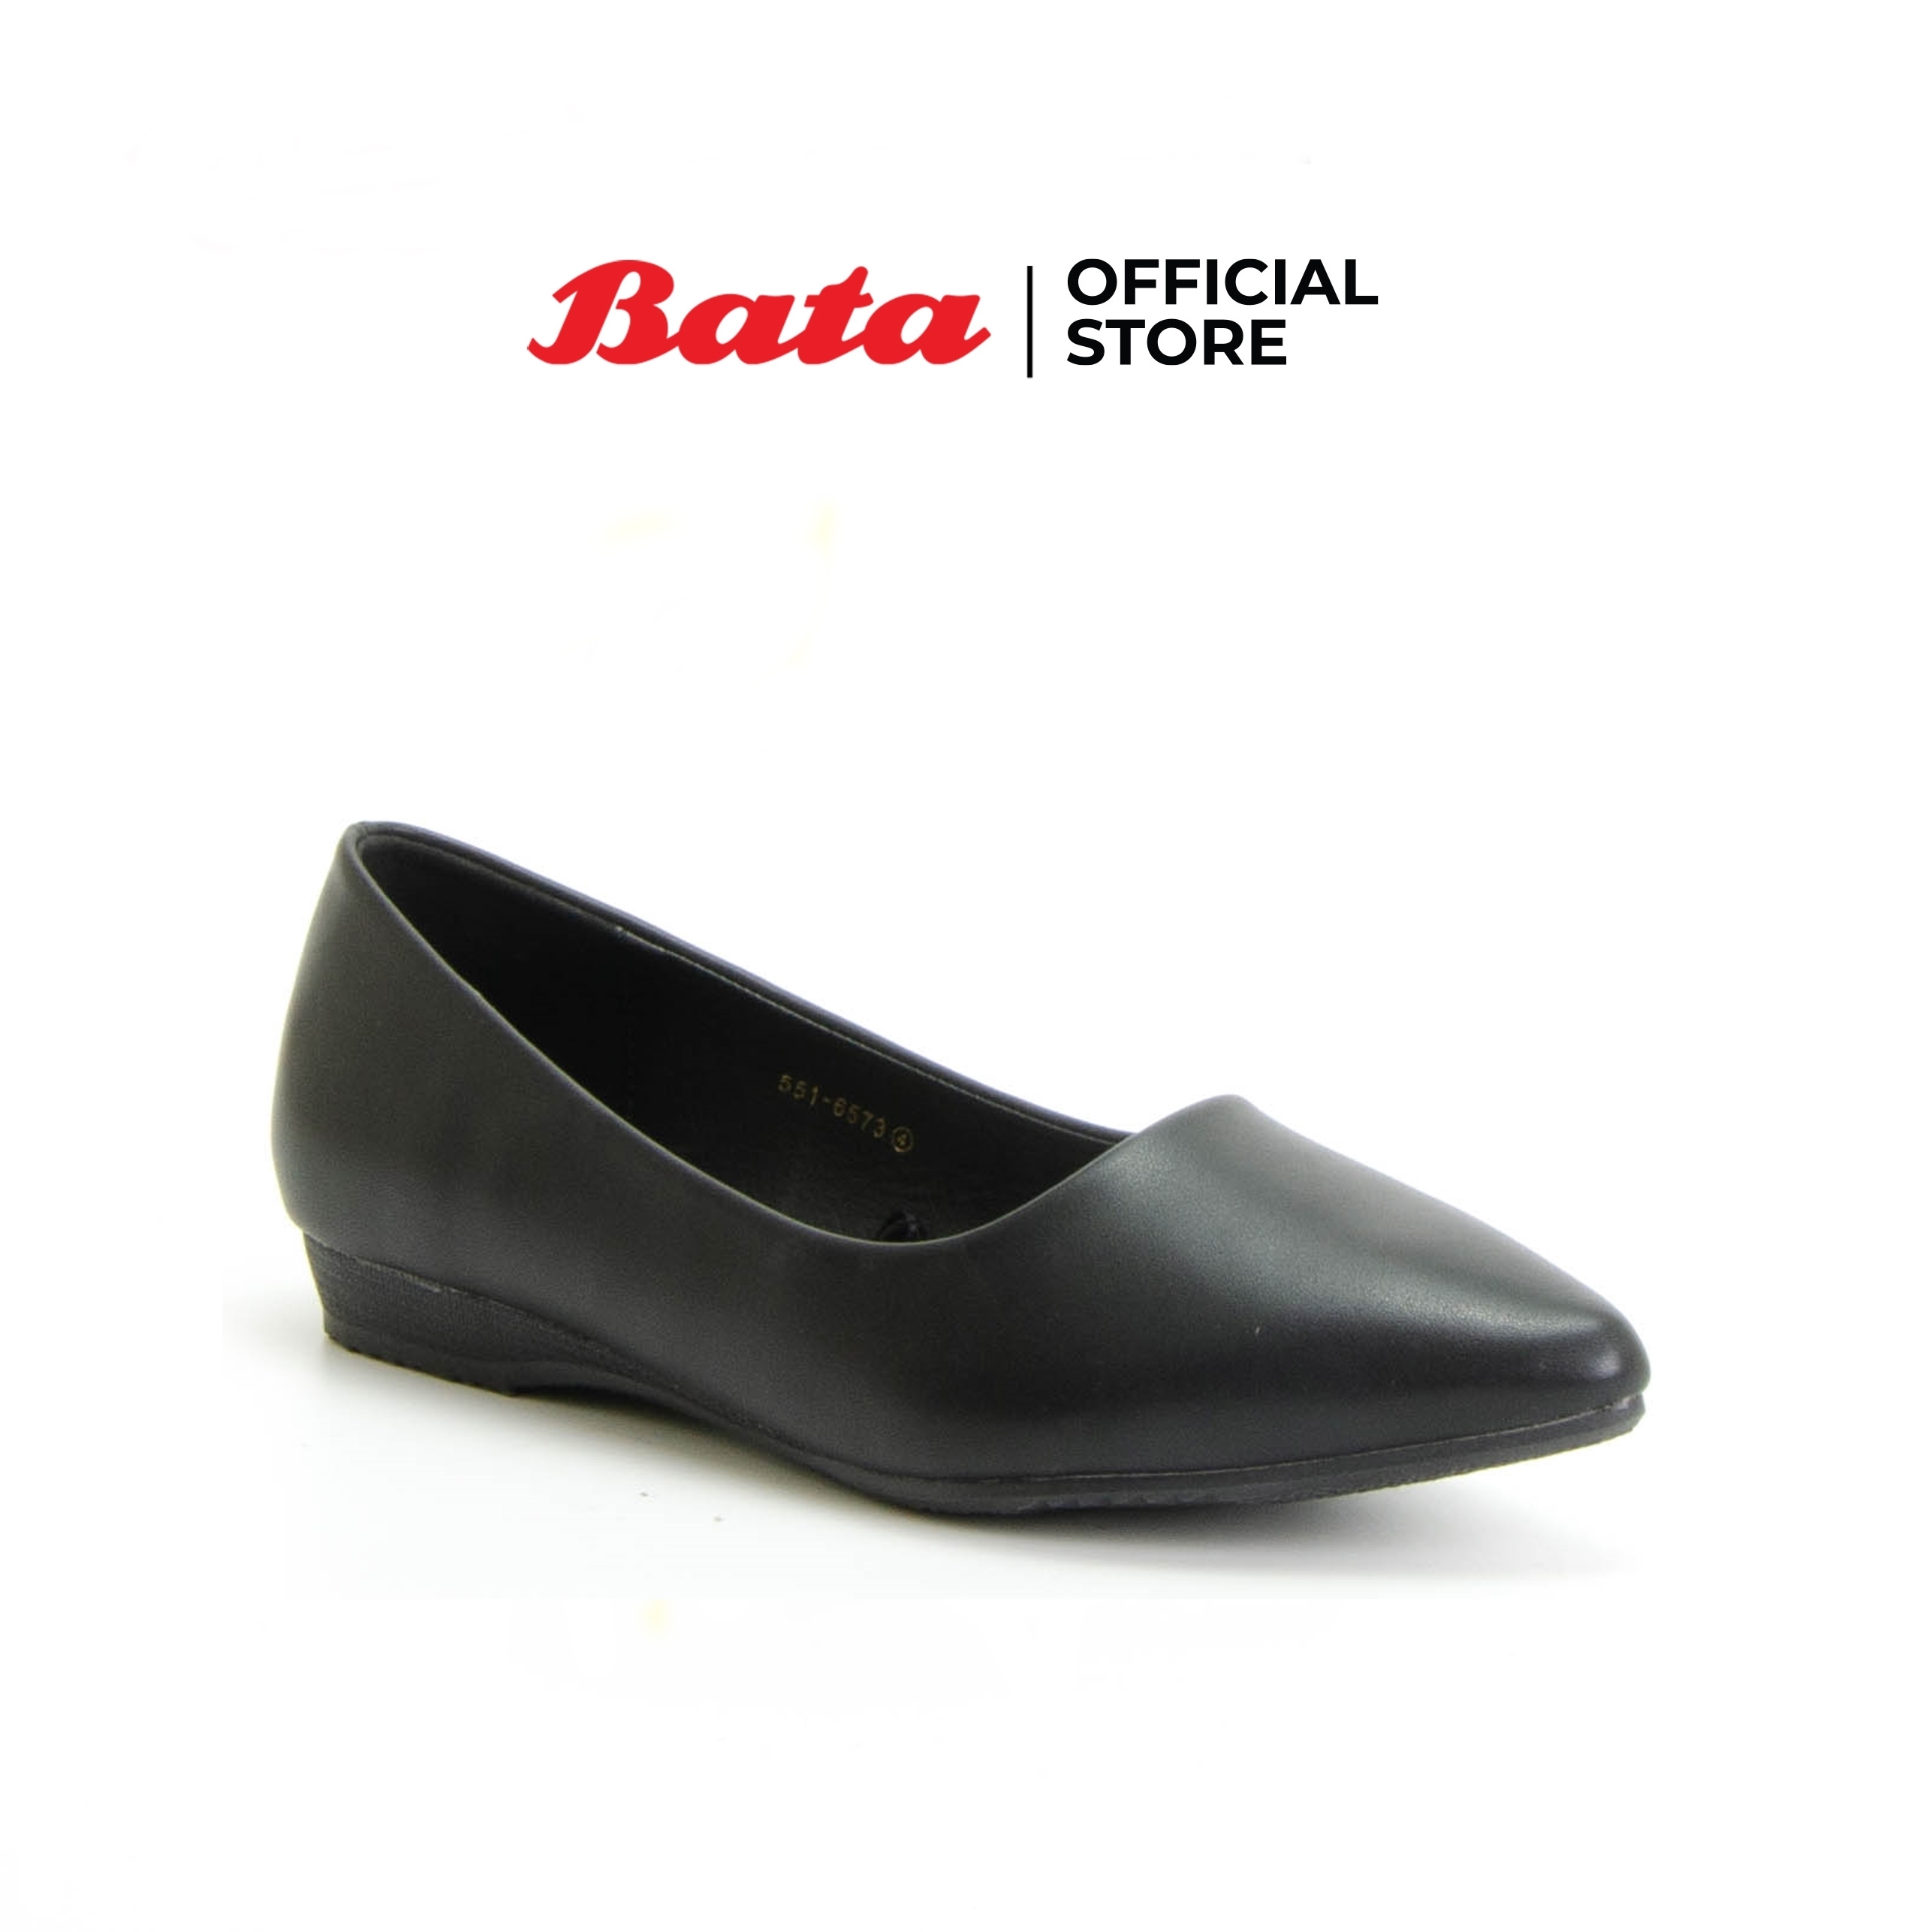 Bata รองเท้าลำลองผู้หญิง LADIES'CASUAL DRESS สีดำ รหัส 5516573 Ladiesflat Fashion